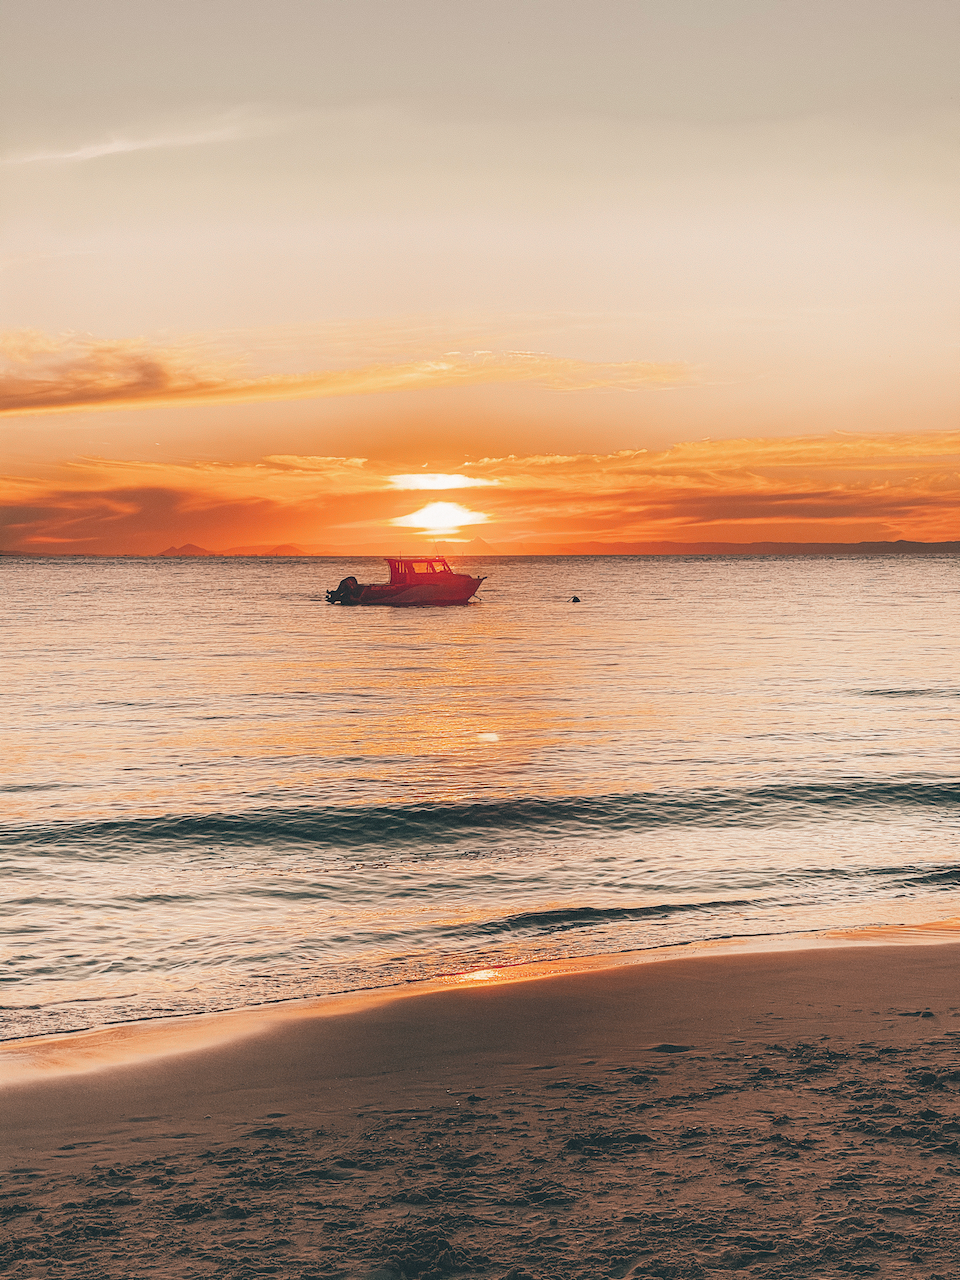 Fishing boat and the sunset - Moreton Island - Queensland - Australia